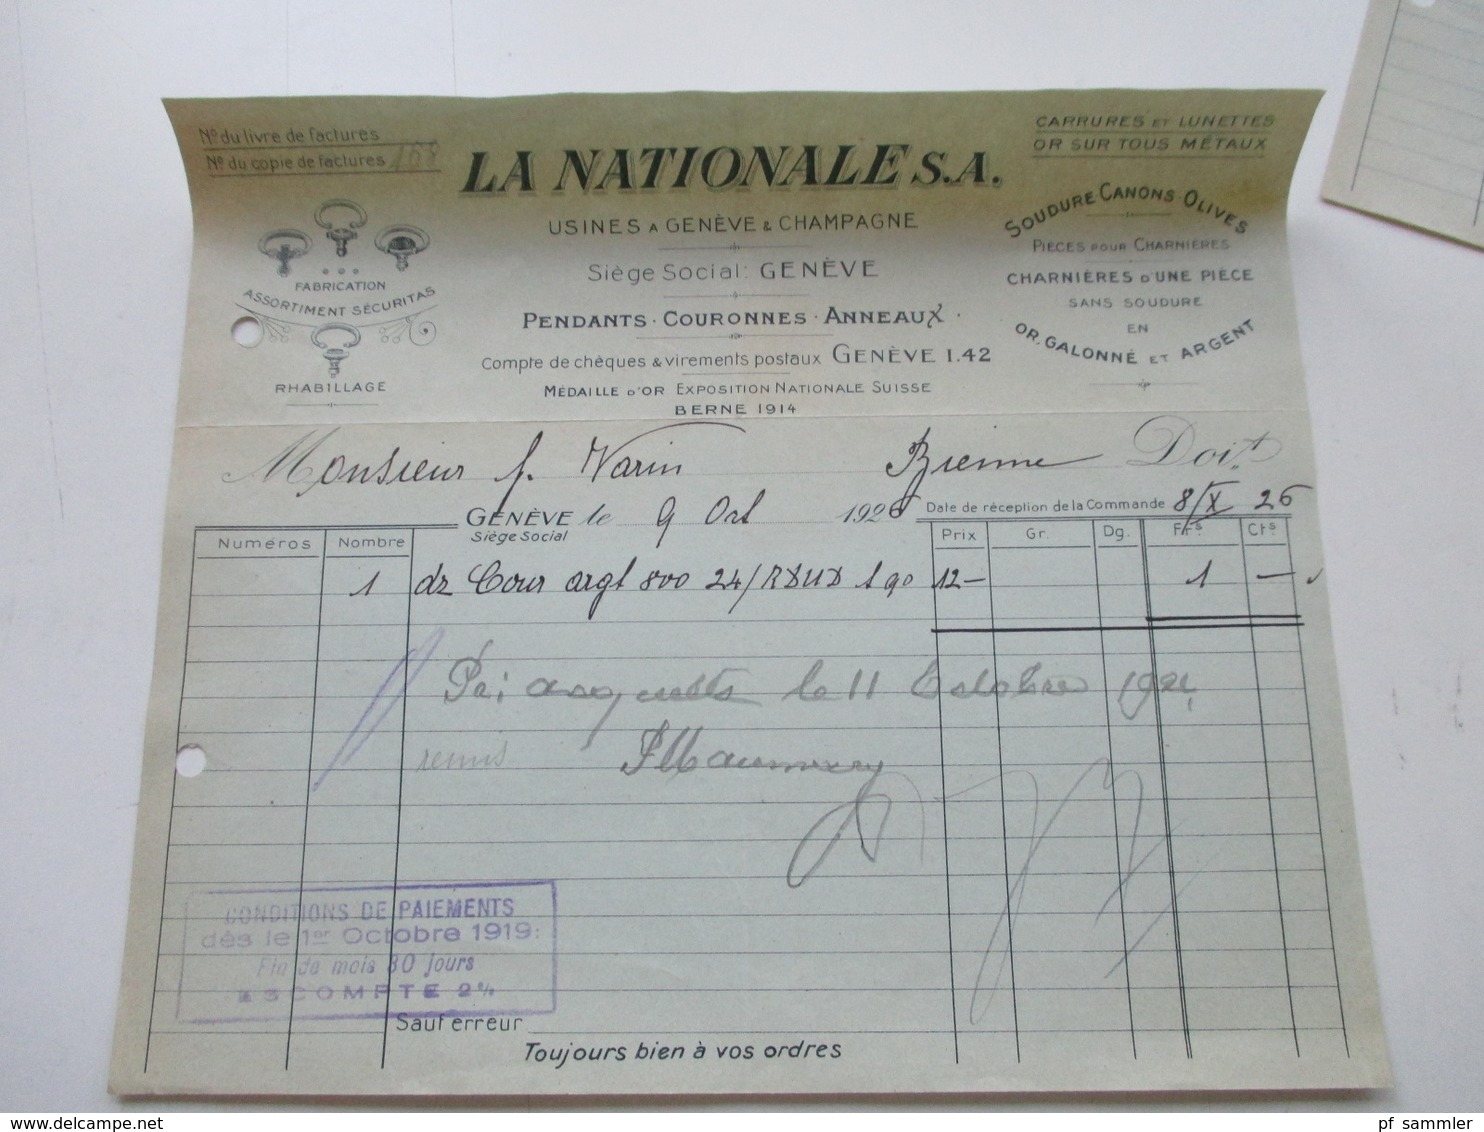 Schweiz 1924 / 26 4 Rechnungen La Nationale S.A. Usines A Geneve & Champagne Fabrication Assortiment Securitas - Schweiz